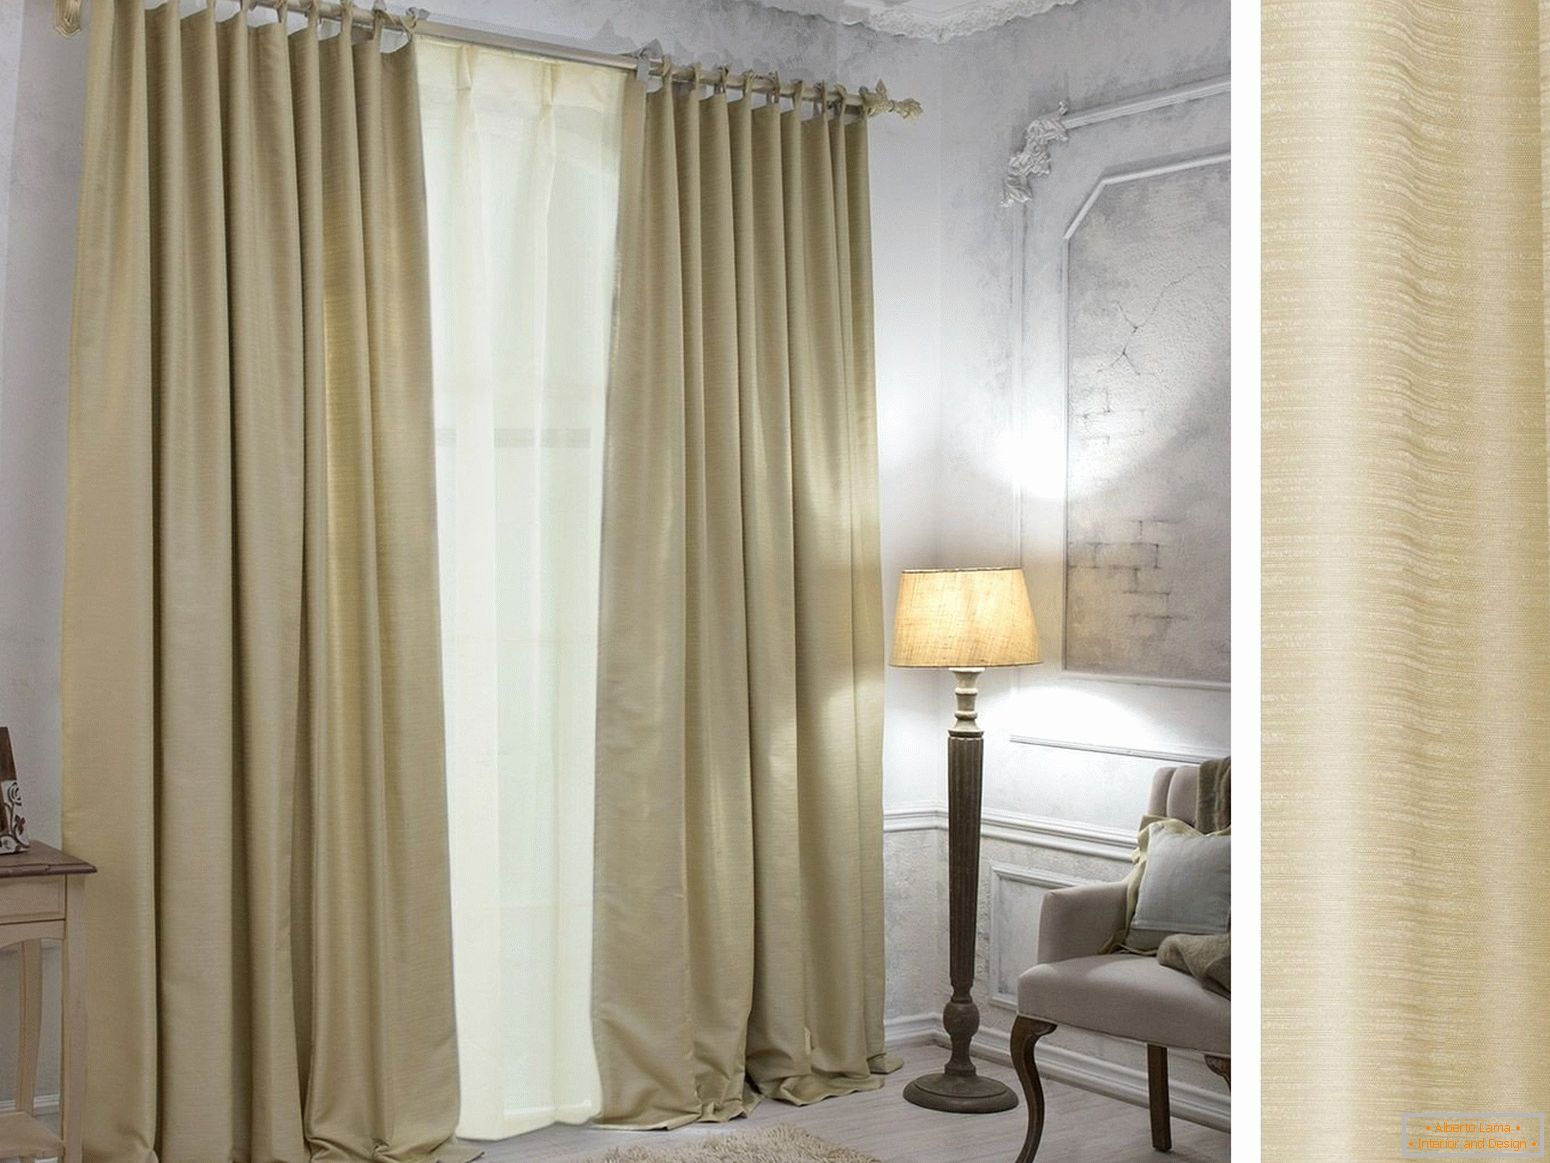 Monochrome curtains